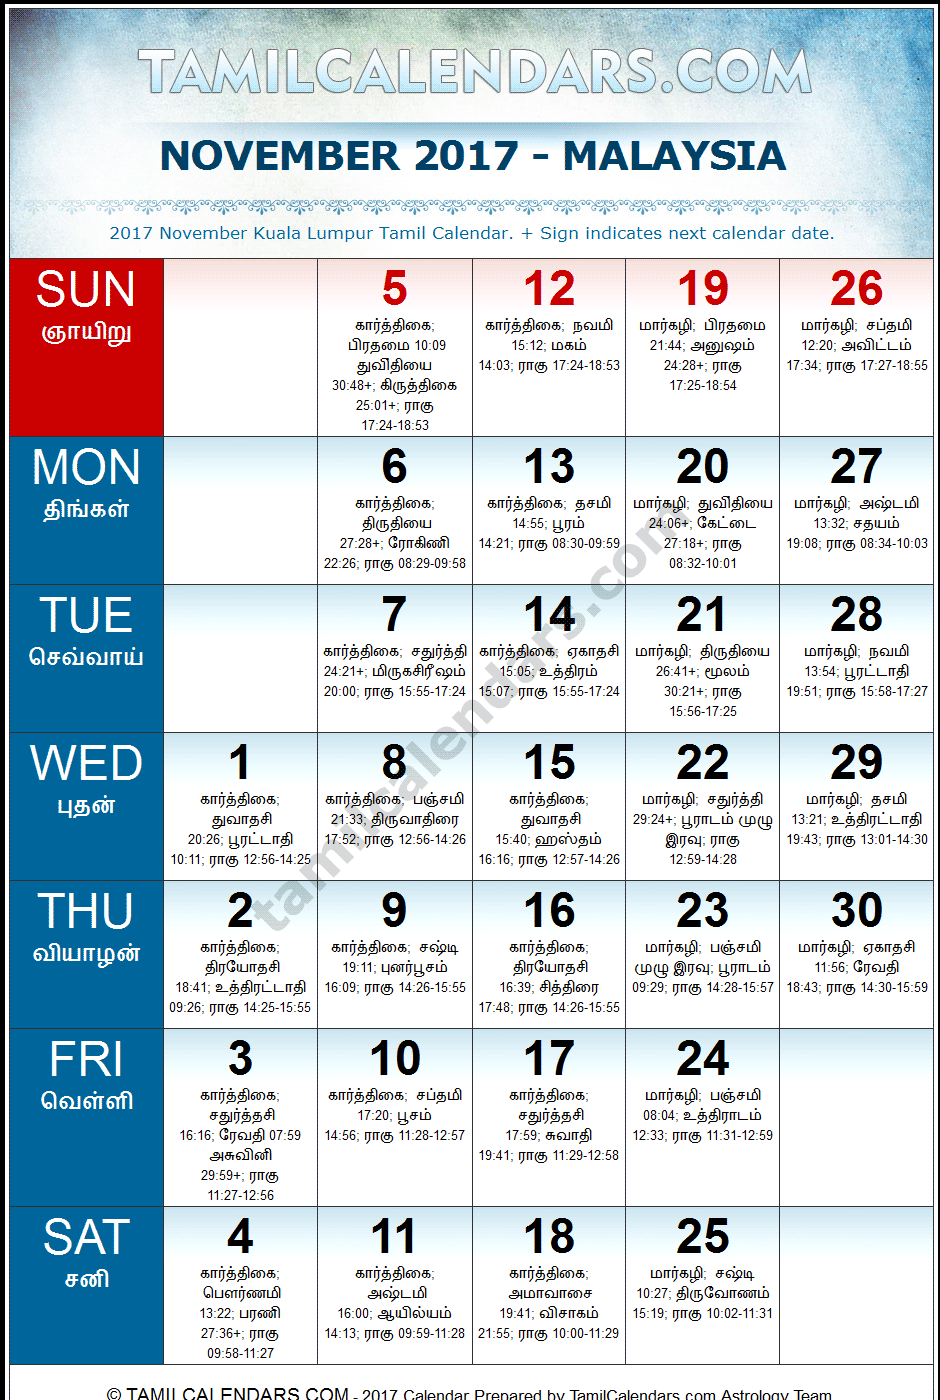 November 2017 Tamil Calendar for Malaysia (Kuala Lumpur)